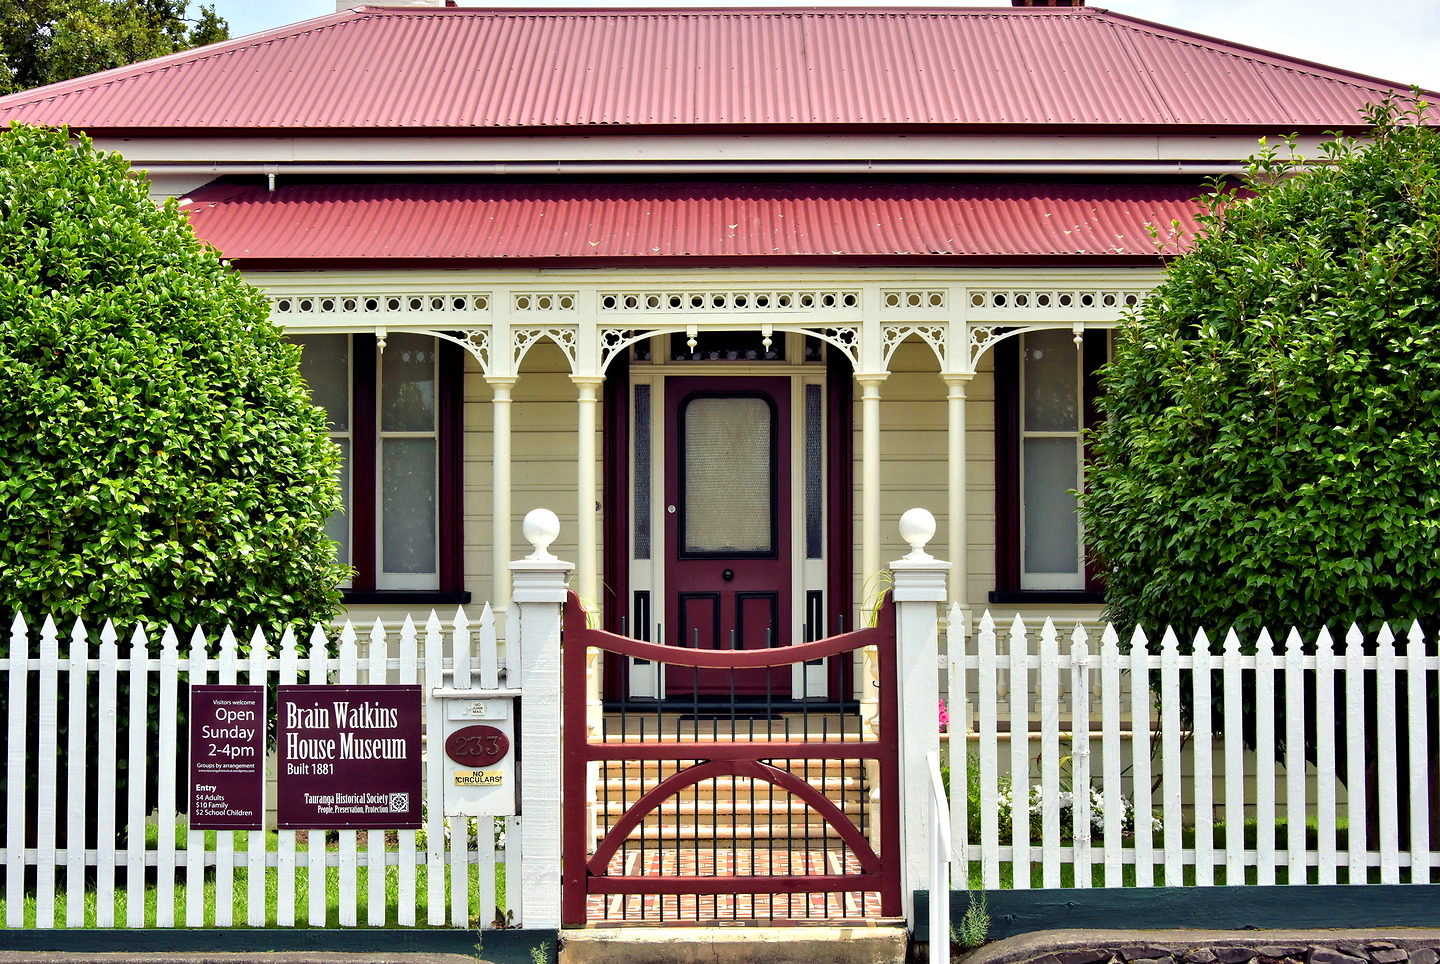 Brain Watkins House, Tauranga, New Zealand @Richard F. Ebert